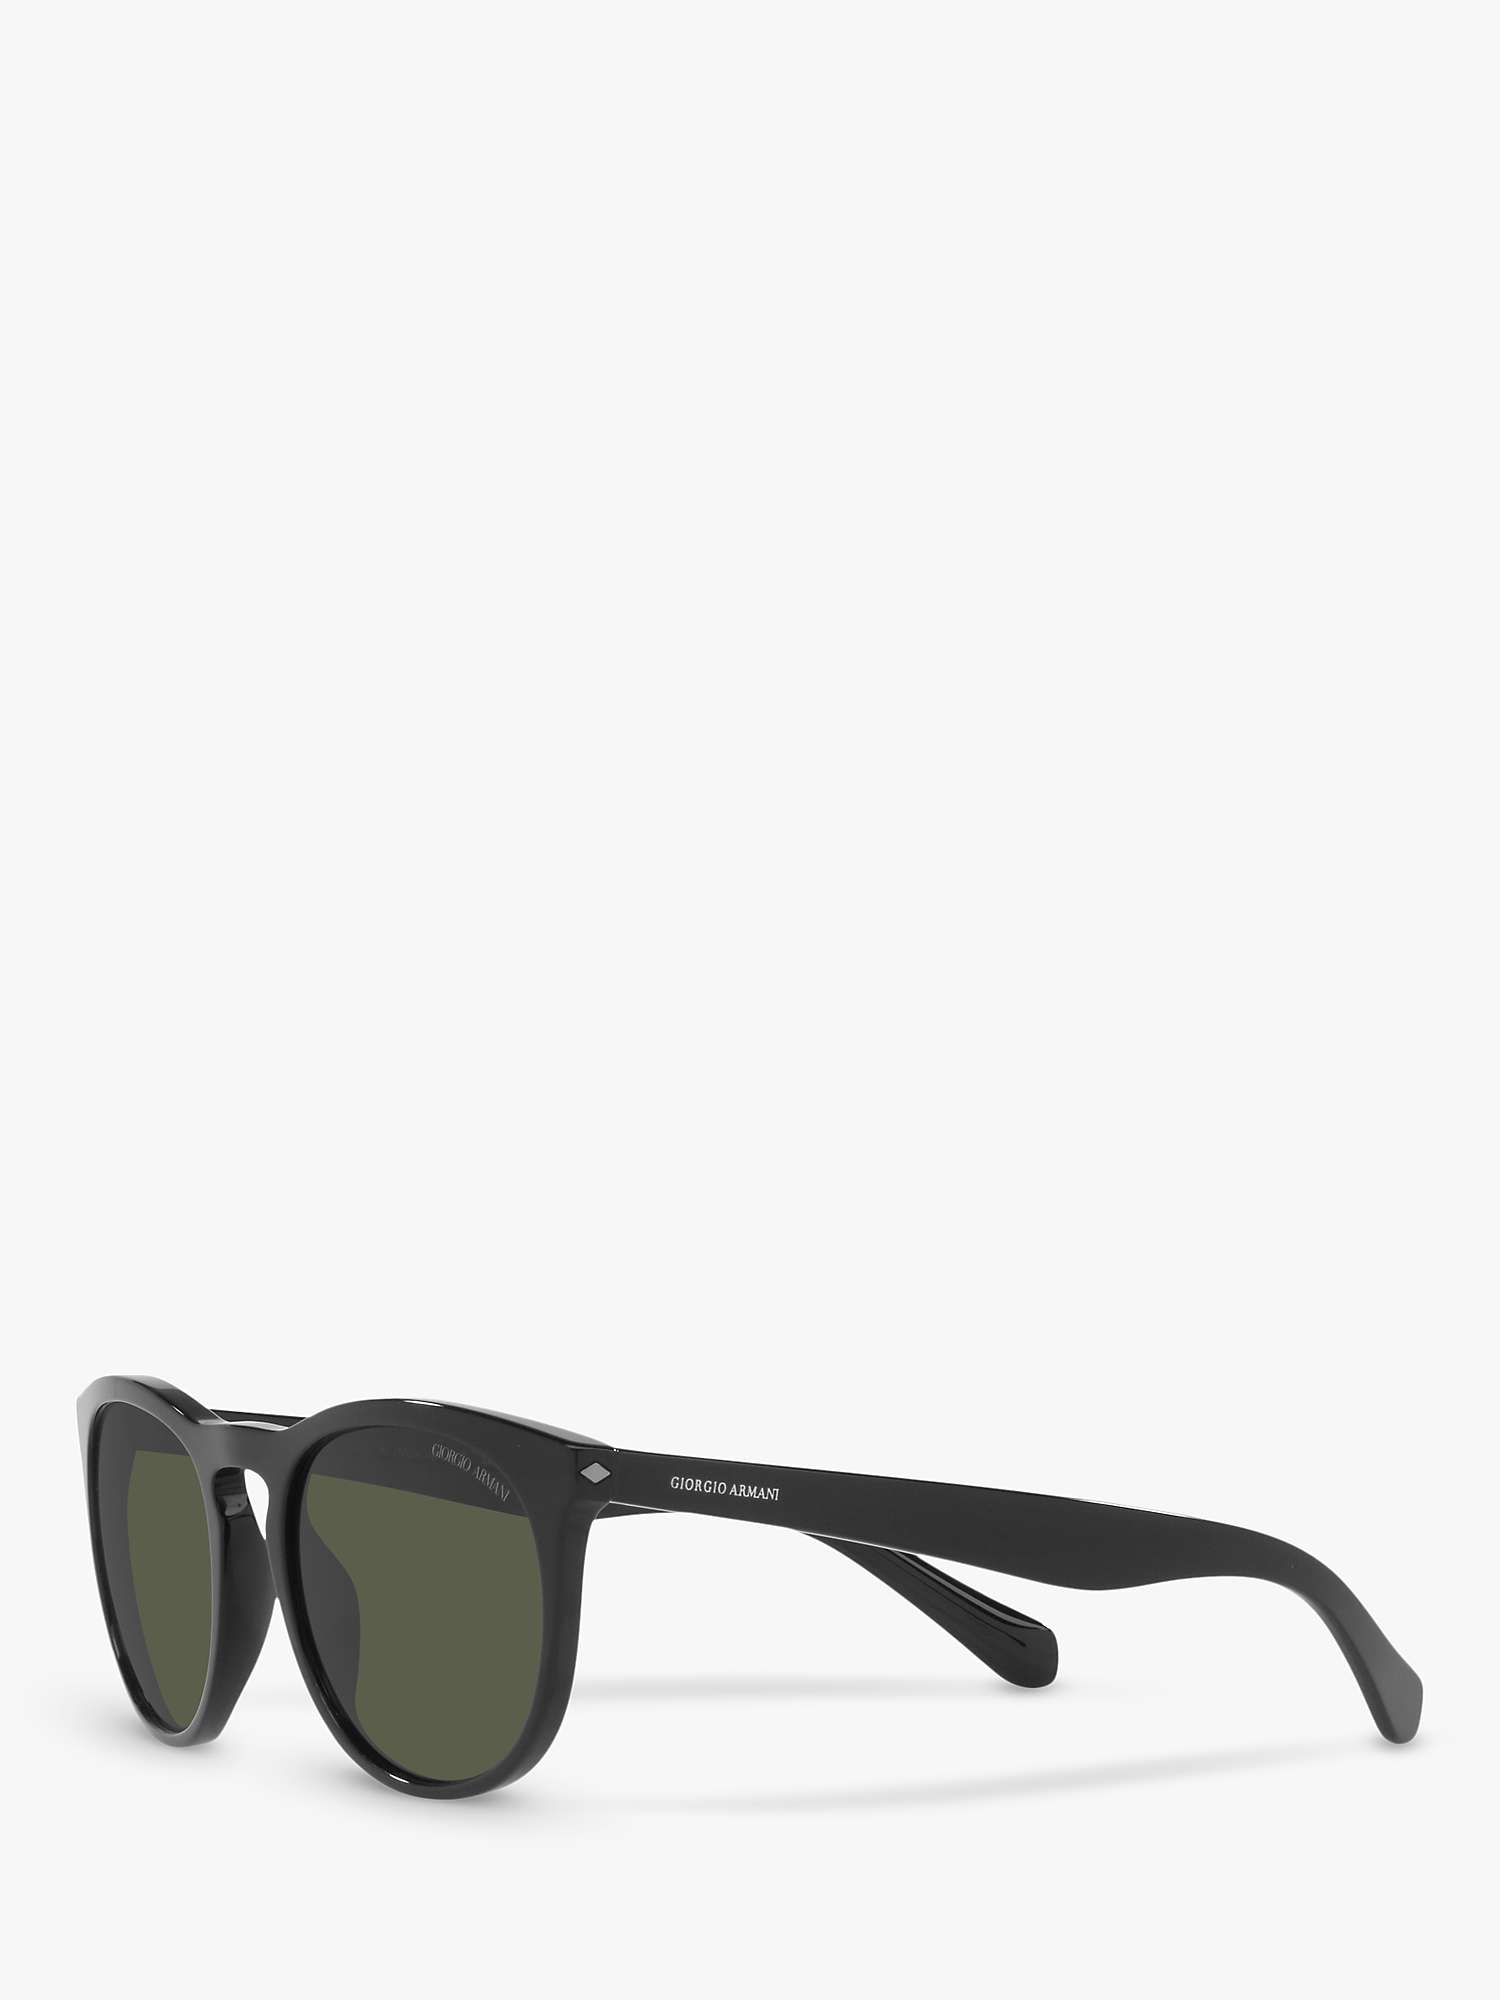 Buy Emporio Armani AR814958 Men's Pillow Sunglasses, Black/Green Online at johnlewis.com